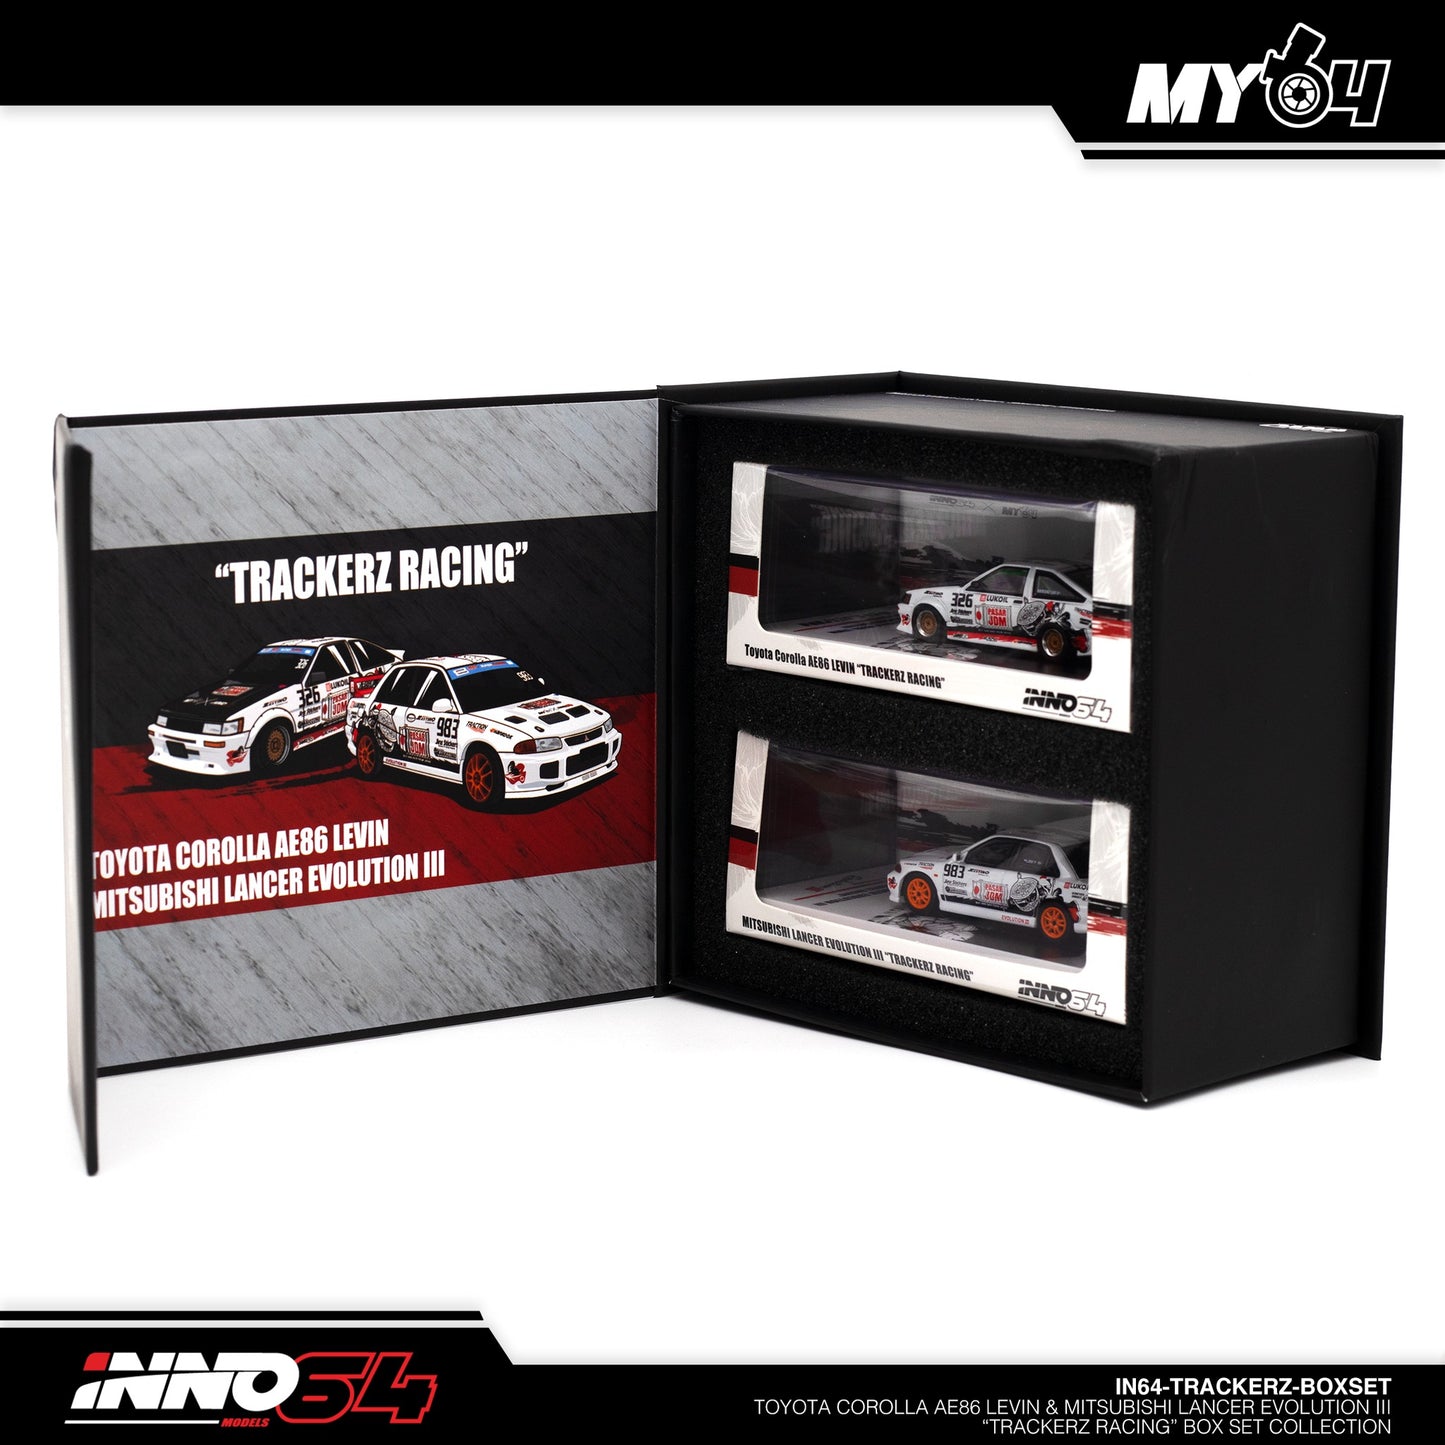 [INNO64] Toyota Corolla AE86 Levin & Mitsubishi Lancer Evolution III "Trackerz Racing" Box Set Collection